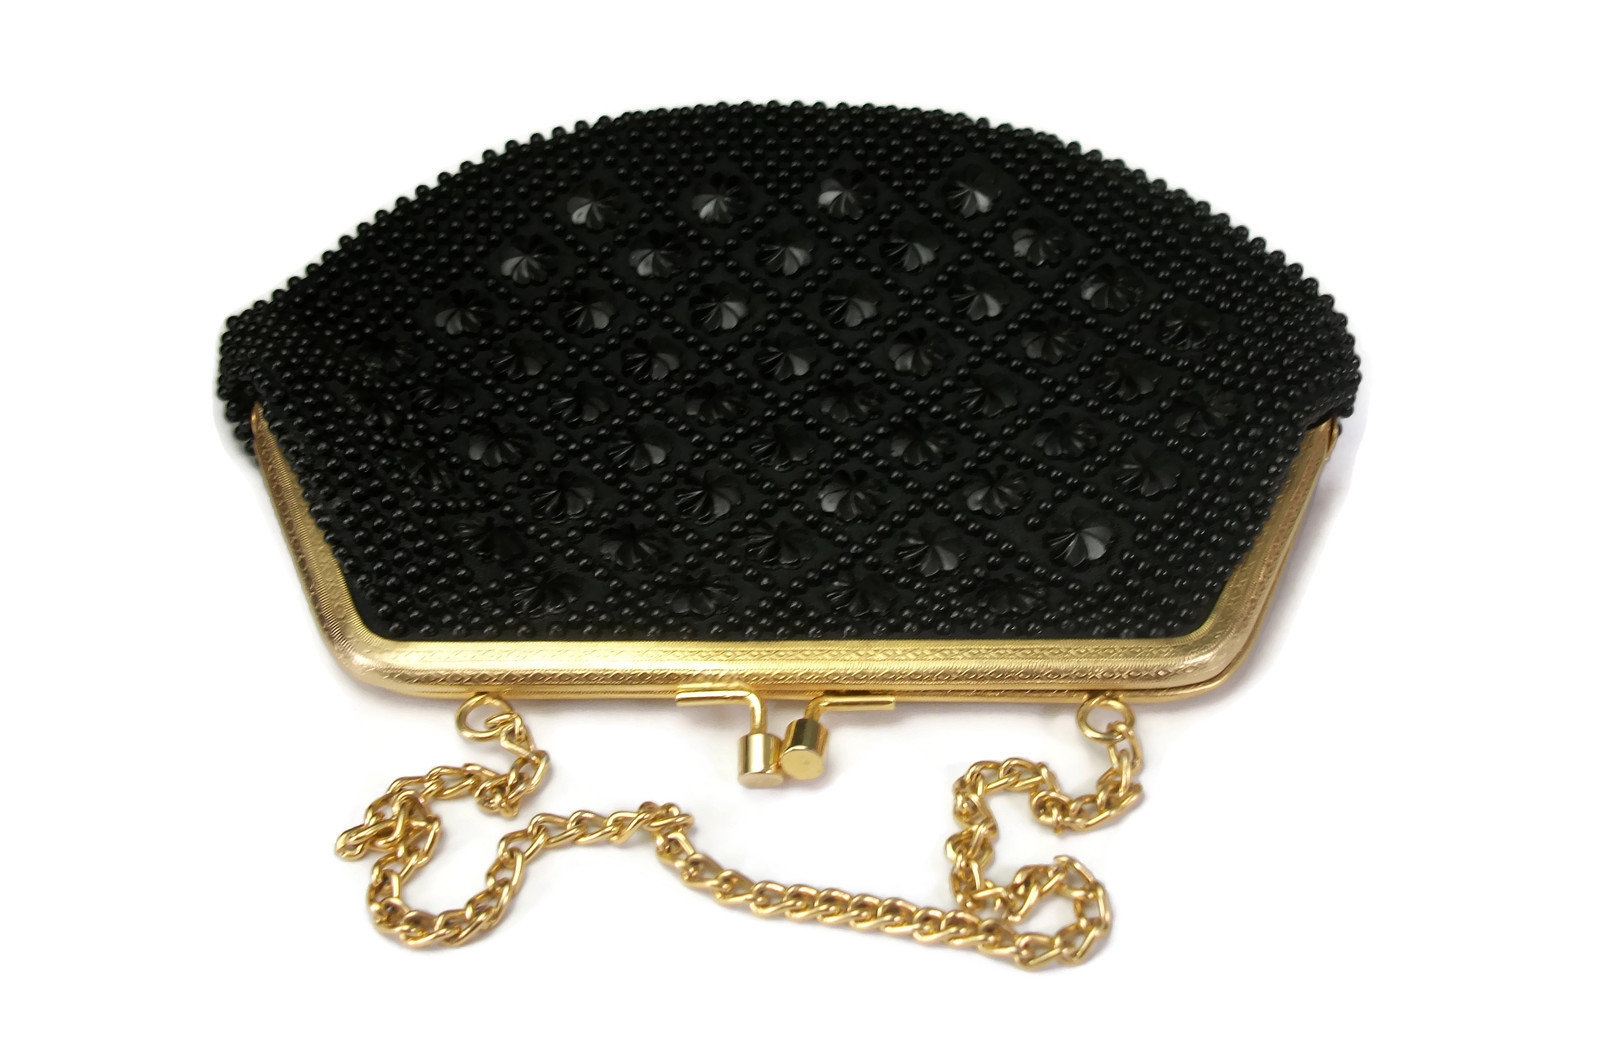 Vintage Black Beaded Evening Purse Clutch Gold Chain Link Safety Strap  Satin Lining Hand Made in Hong Kong Handbag Florette Flower Beads